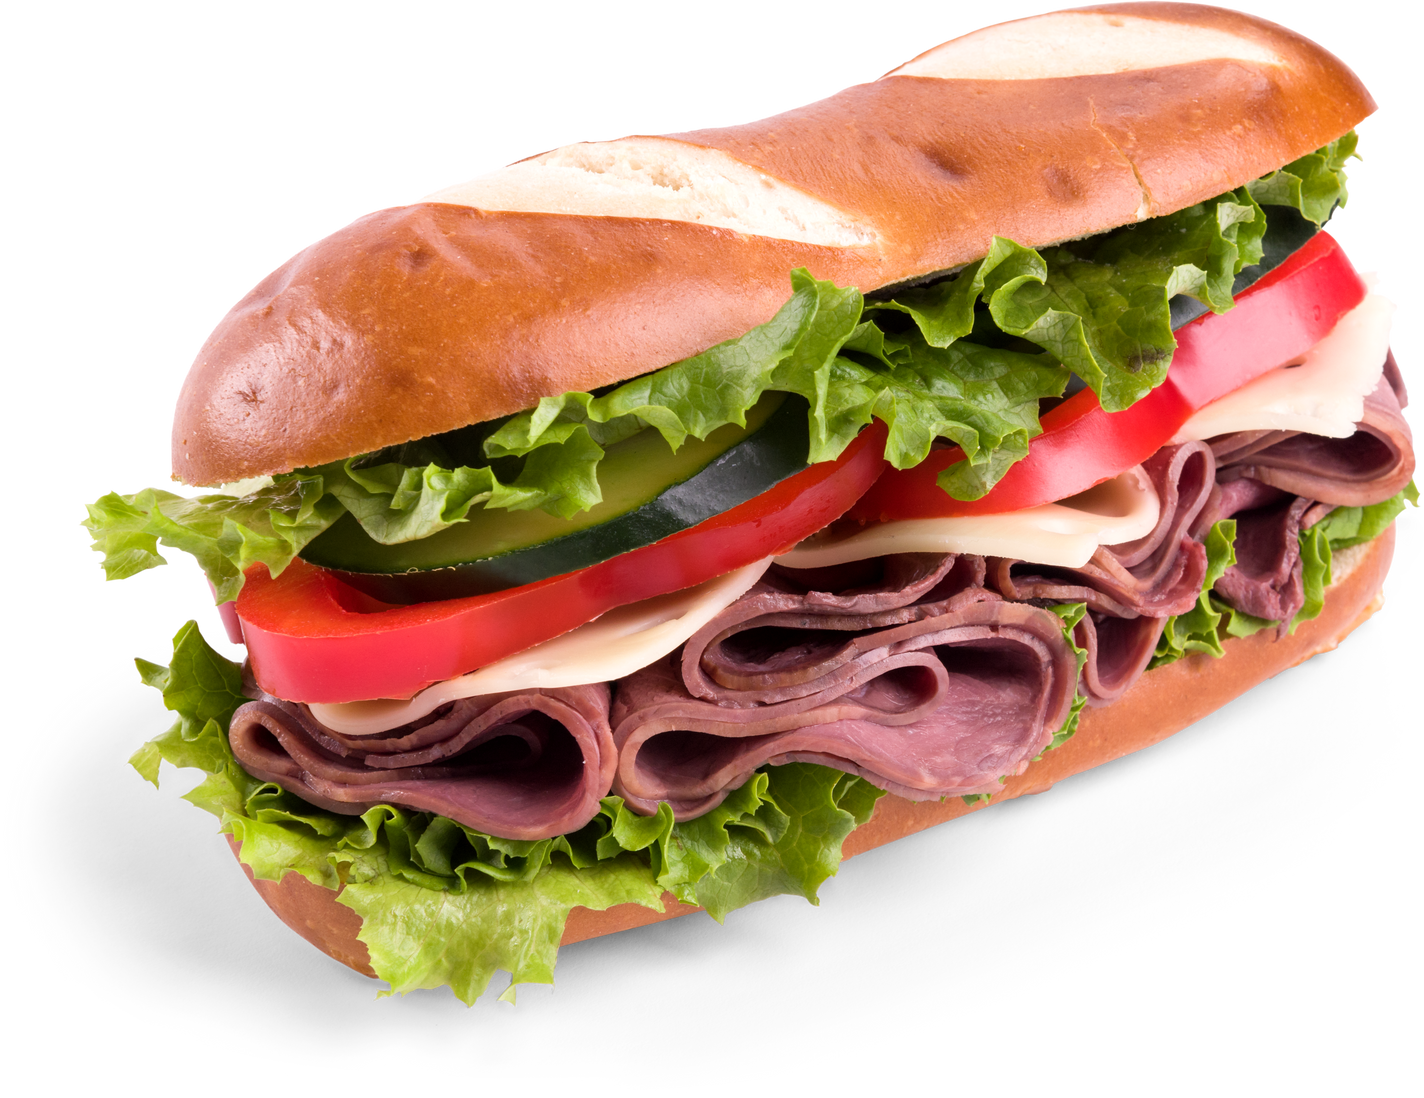 Roast beef sub sandwich - Isolated